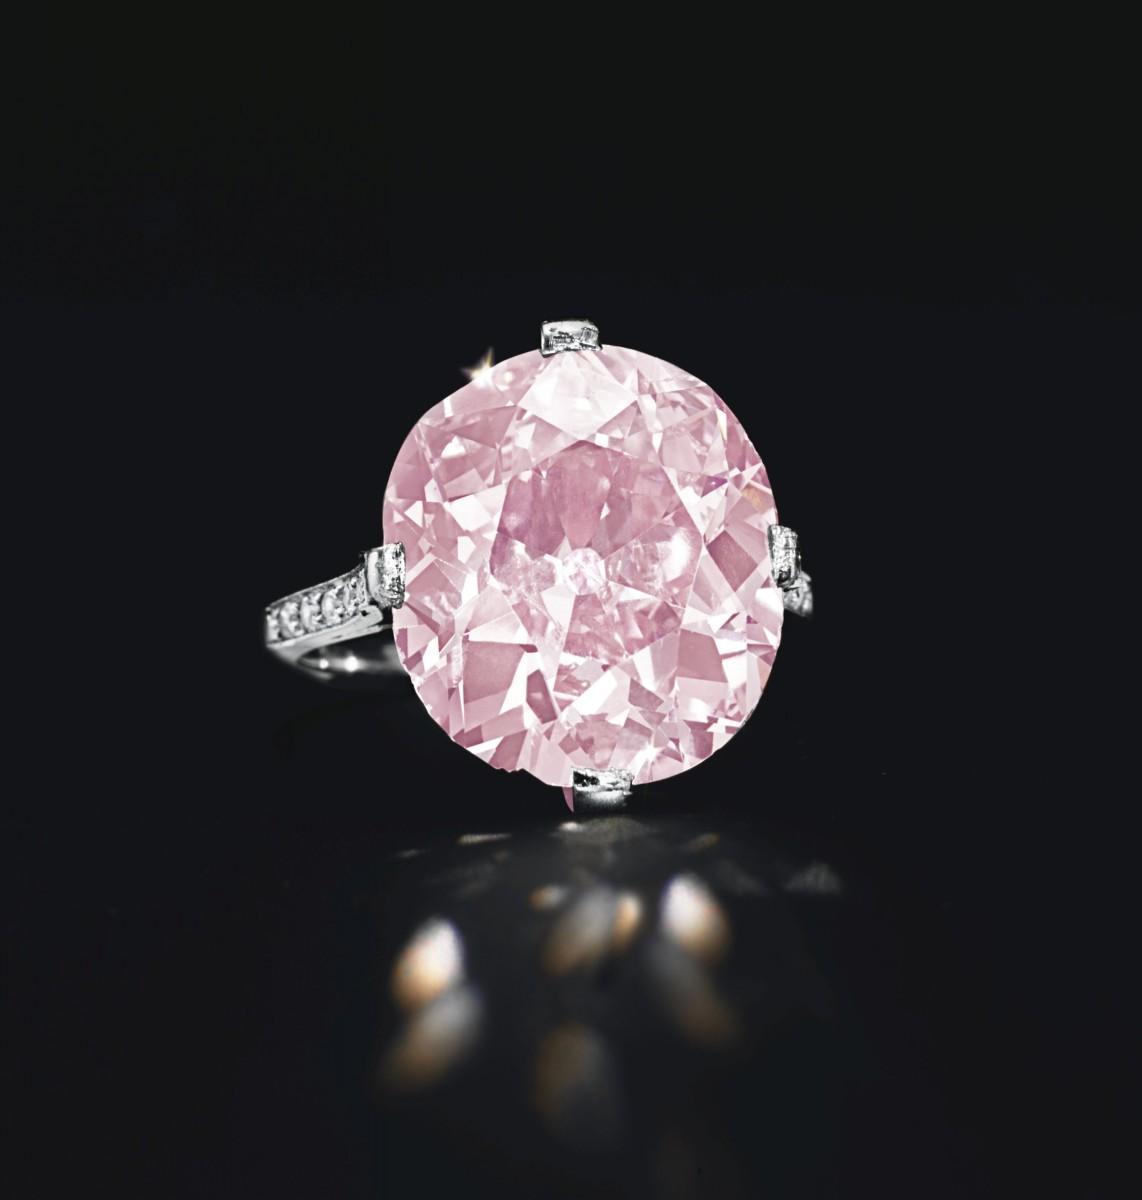 <a><img class="size-medium wp-image-1788463" title="Pink Diamond Ring" src="https://www.theepochtimes.com/assets/uploads/2015/09/DiamondRing.jpg" alt="" width="350" height="262"/></a>